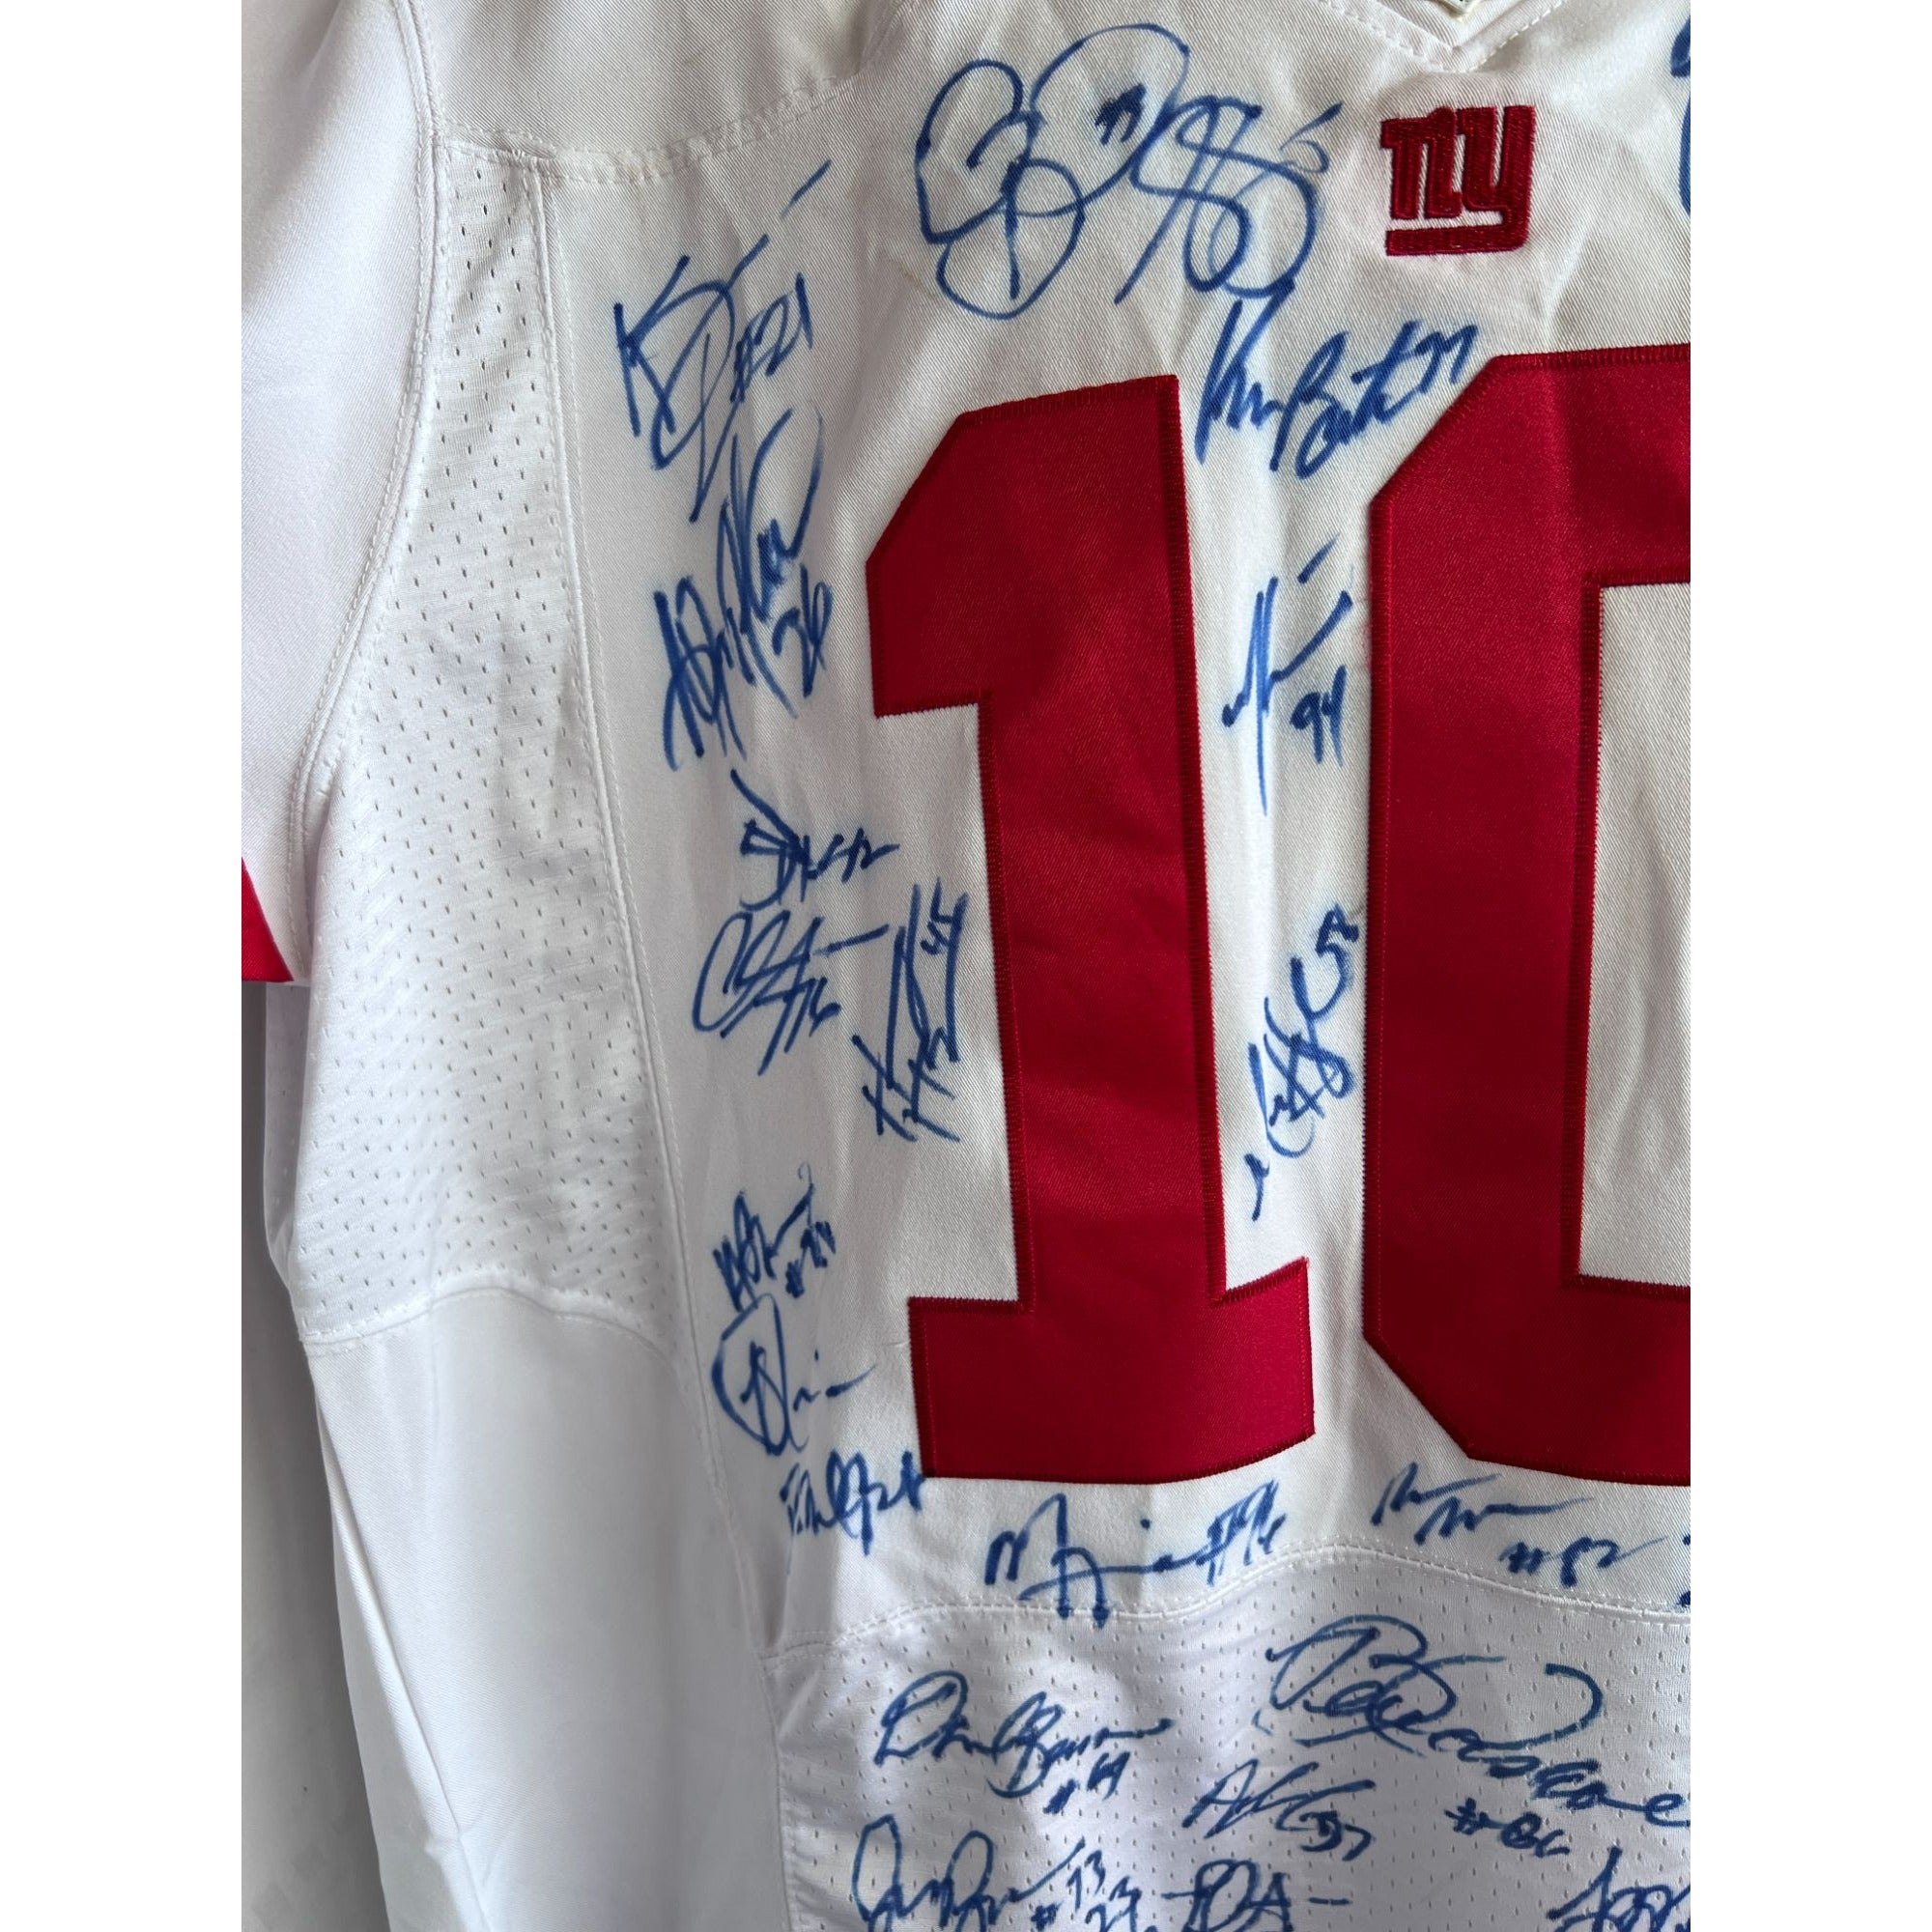 Eli Manning 2012 New York Giants Super Bowl champions team sign Jersey Nike game model size 48 signed